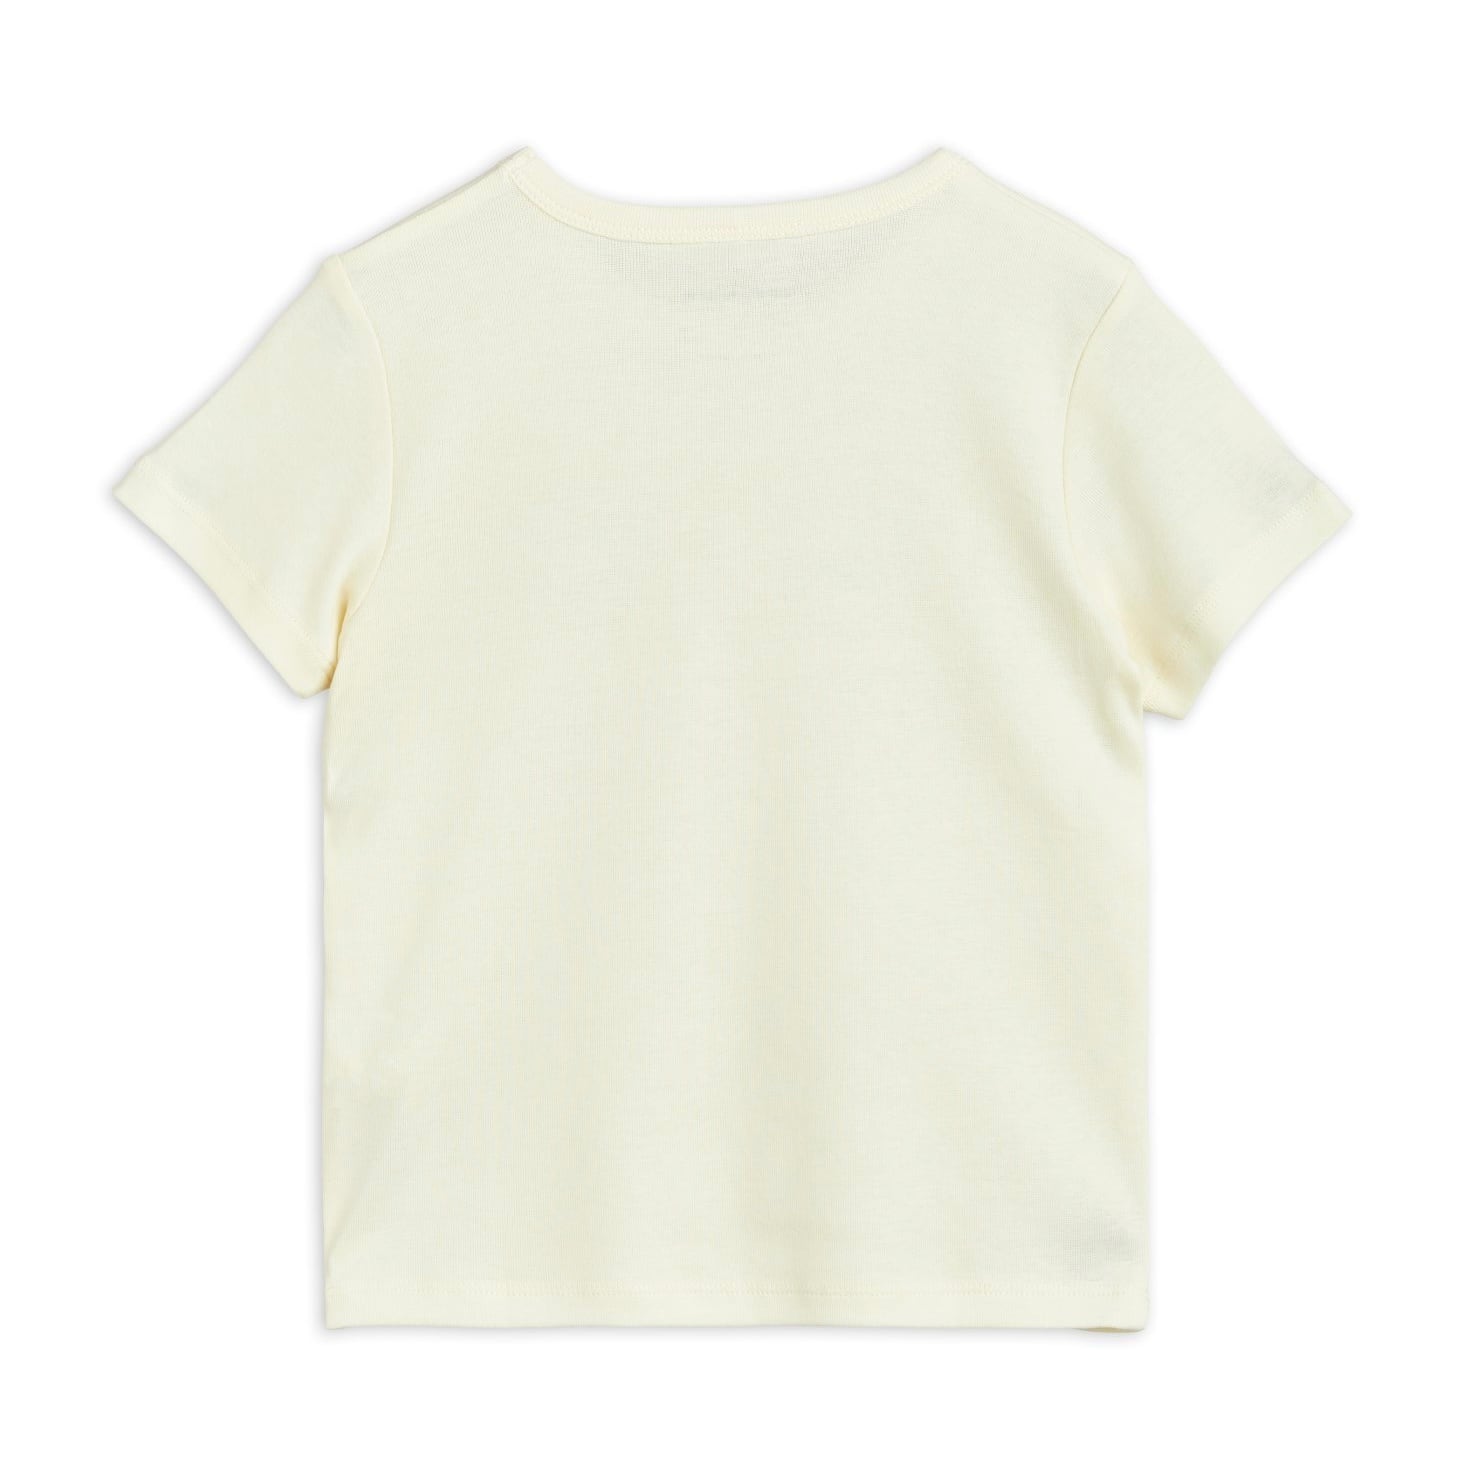 mini rodini / Sun's up T-shirt | HAKONIWA PRODUCTS | ハコニワプロダクツ |  おしゃれな海外子供服・キッズウェア・ベビー服の通販 powered by BASE